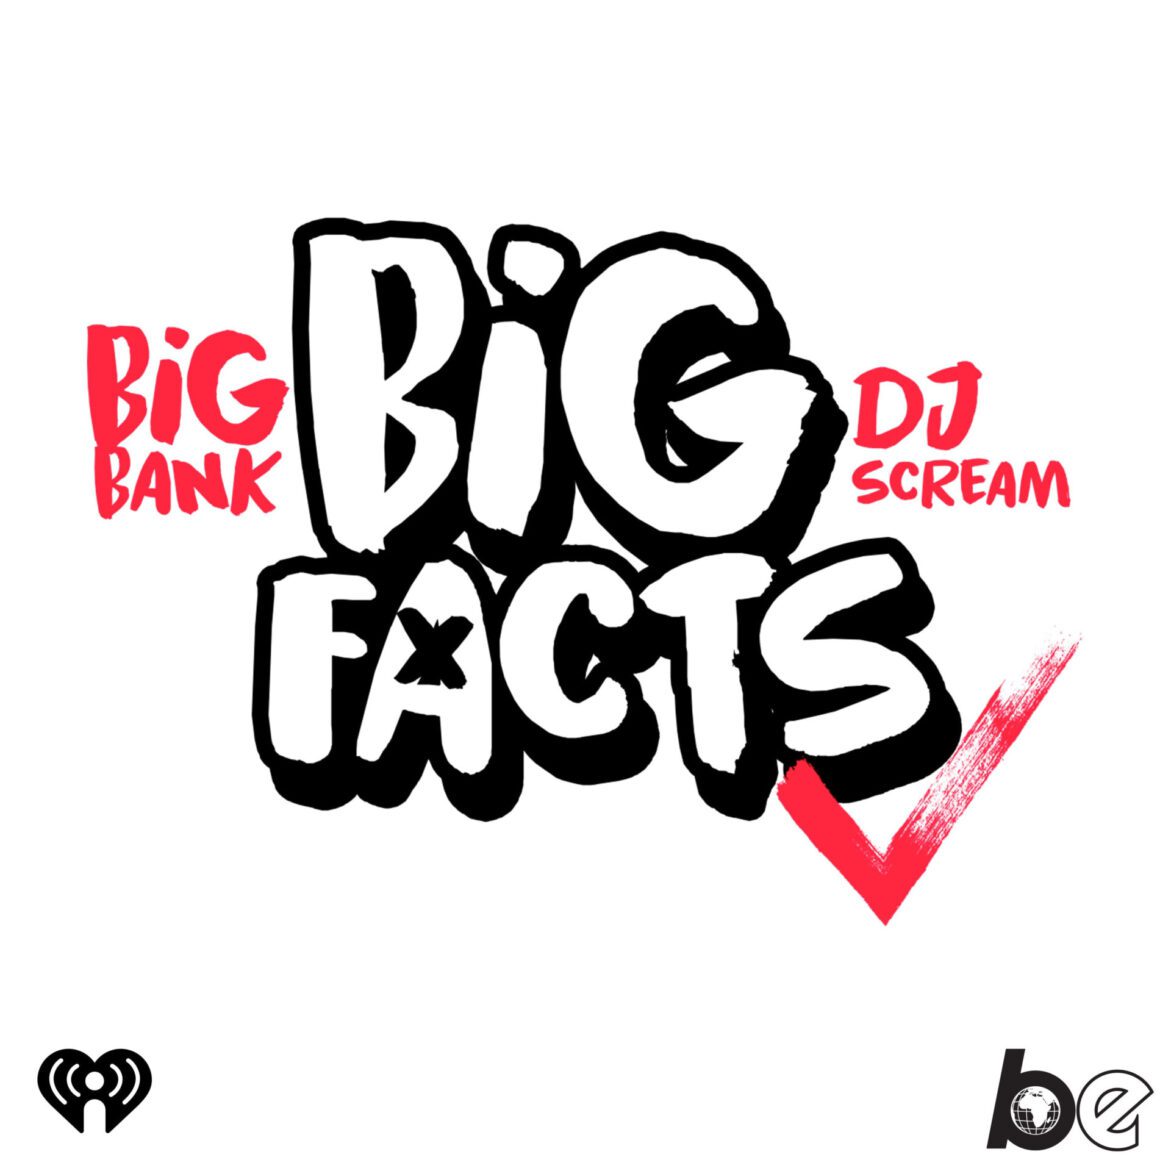 Black Podcasting - Wiz Khalifa, Big Bank, DJ Scream - There's More Than One G.O.A.T.